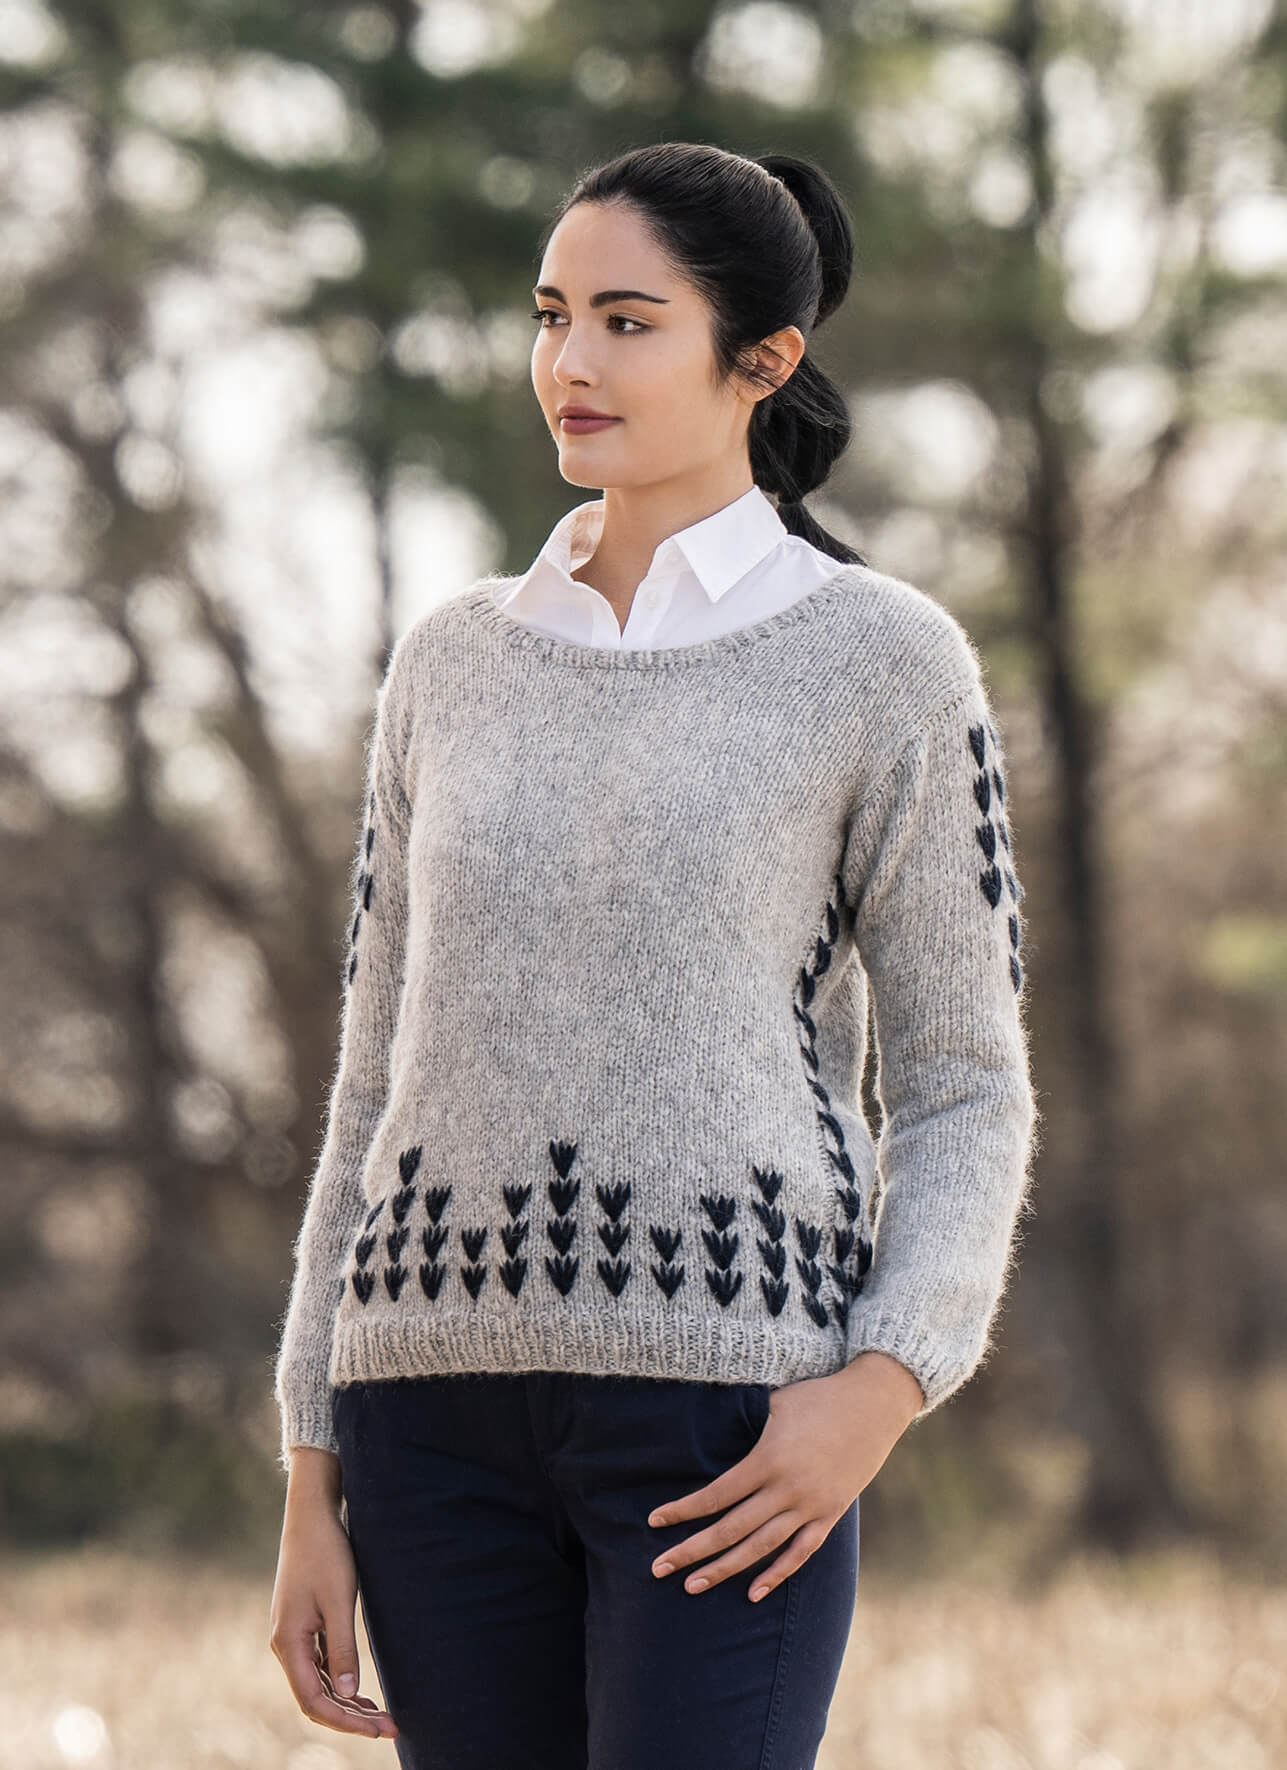 Vest PATTERN Easy to Knit, Advanced Beginner to Intermediate Chunky Knit  Tutorial, Fast Knit Sweater Vest, PDF Sleeveless Sweater Pattern 